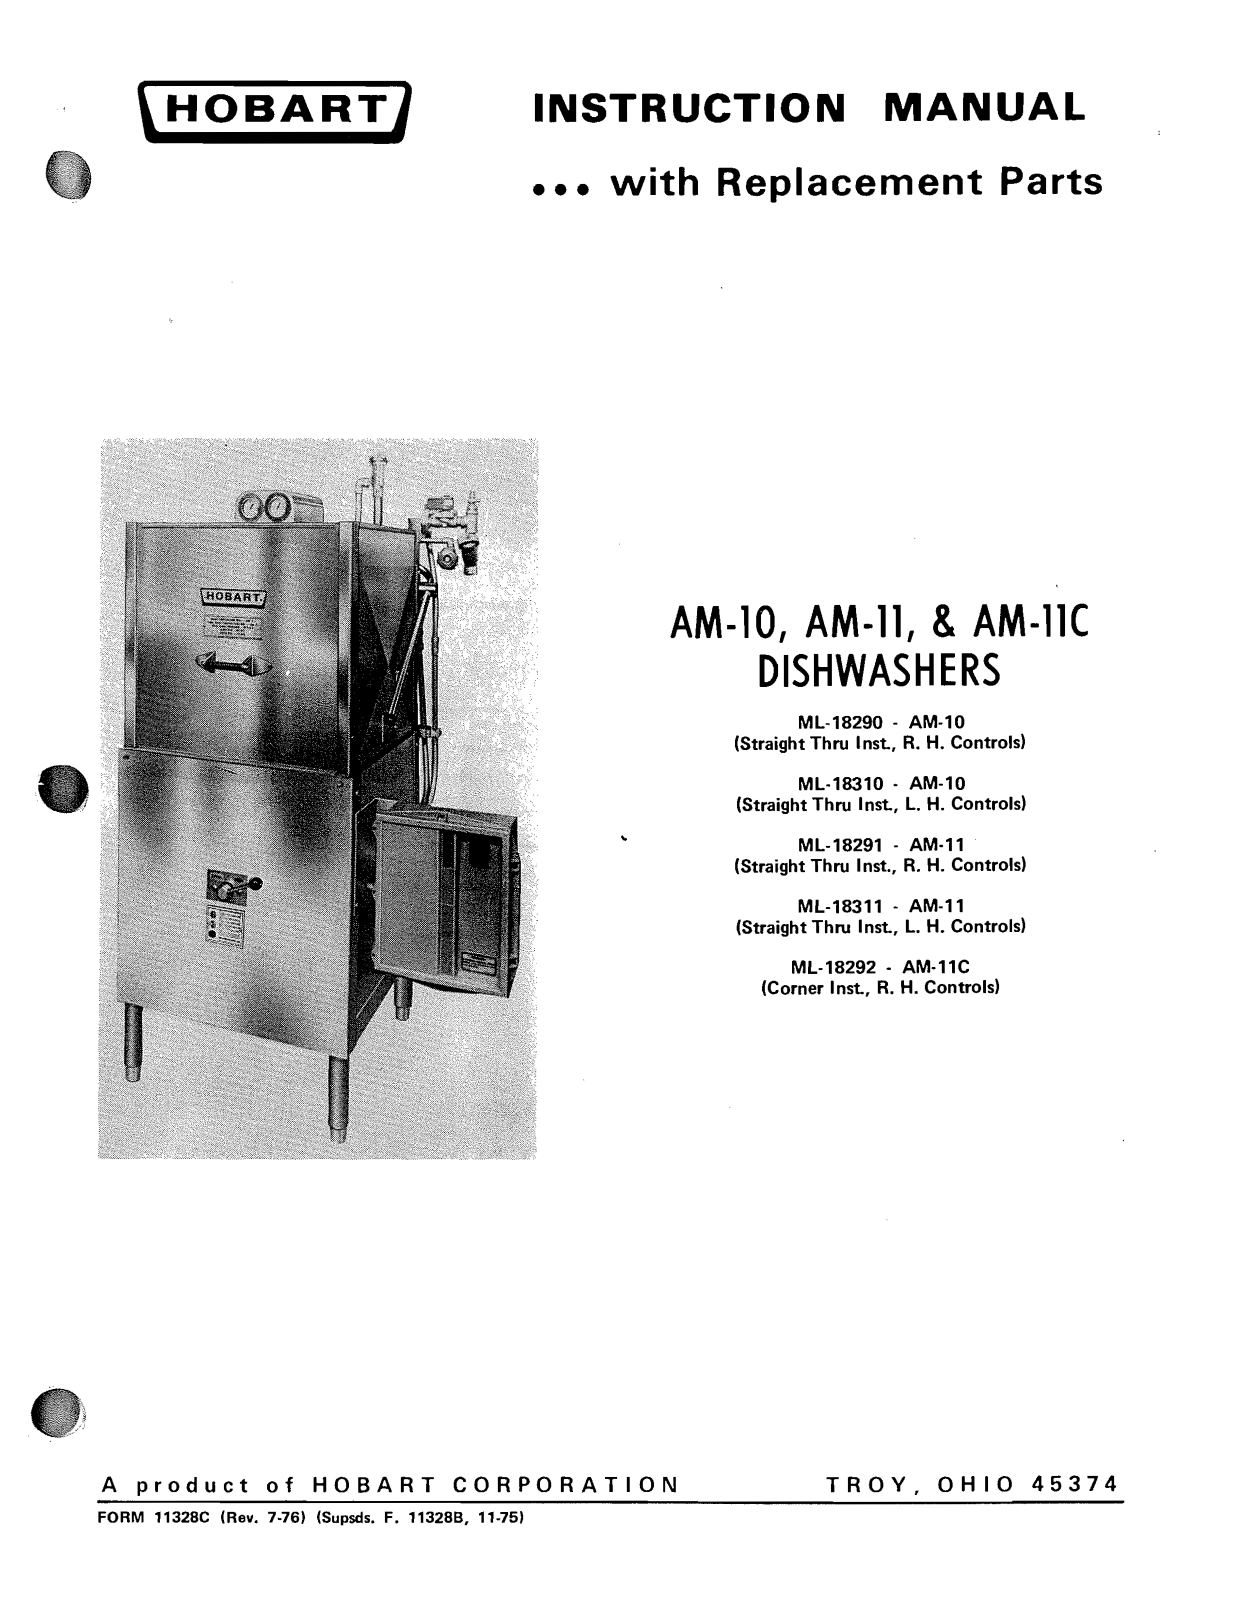 Hobart AM-10 Installation Manual